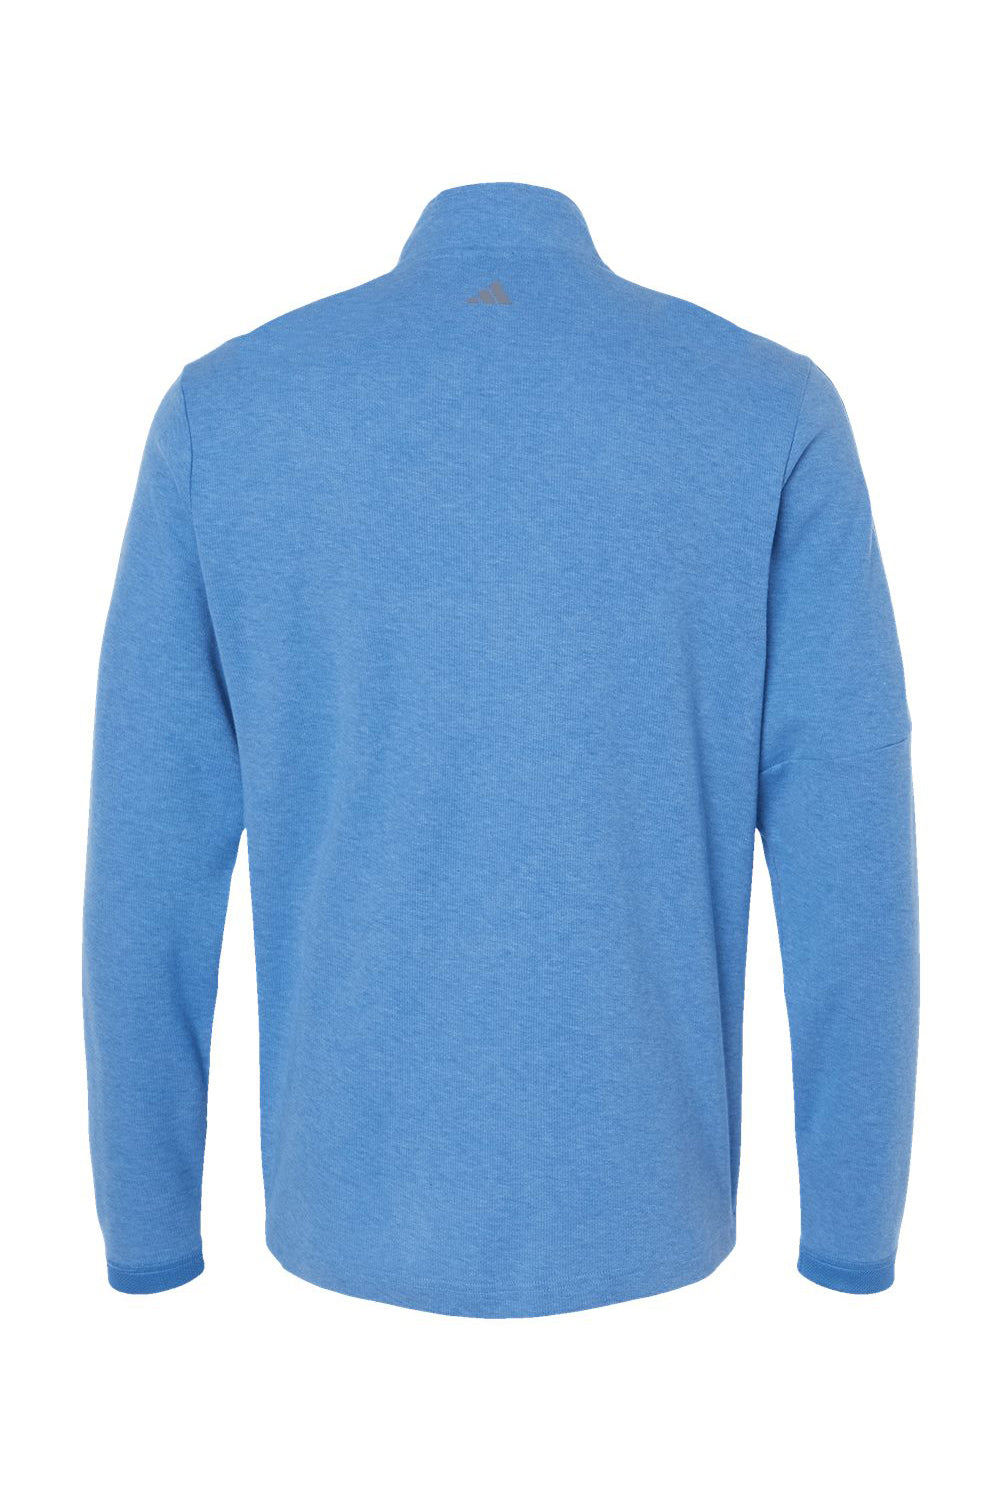 Adidas A554 Mens 3 Stripes Moisture Wicking 1/4 Zip Sweater Focus Blue Melange Flat Back